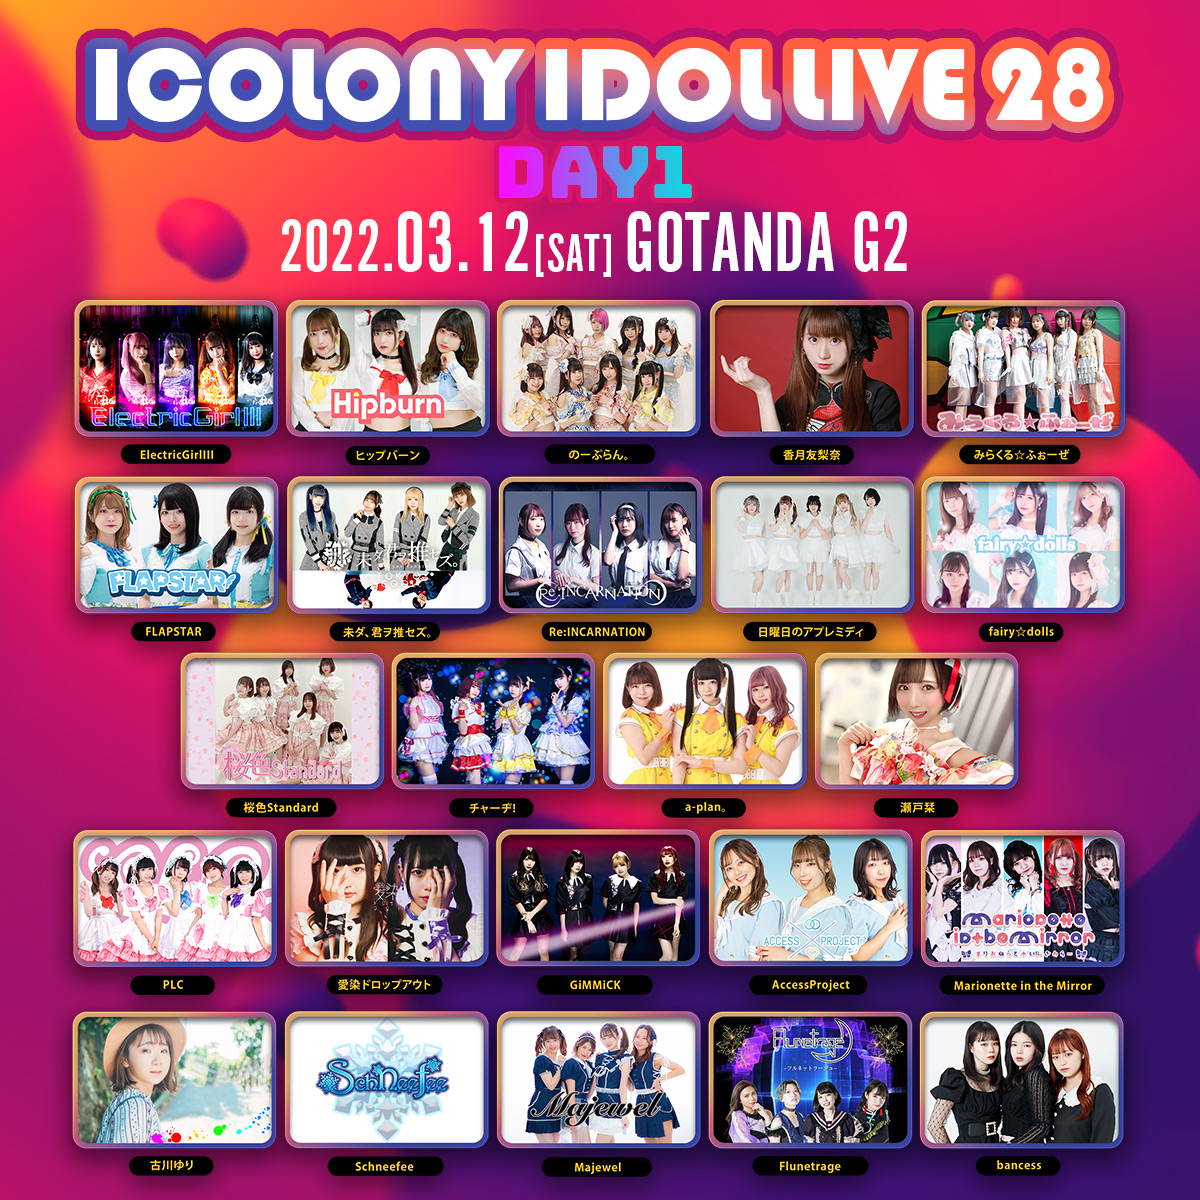 ICOLONY IDOL LIVE 28 // DAY1